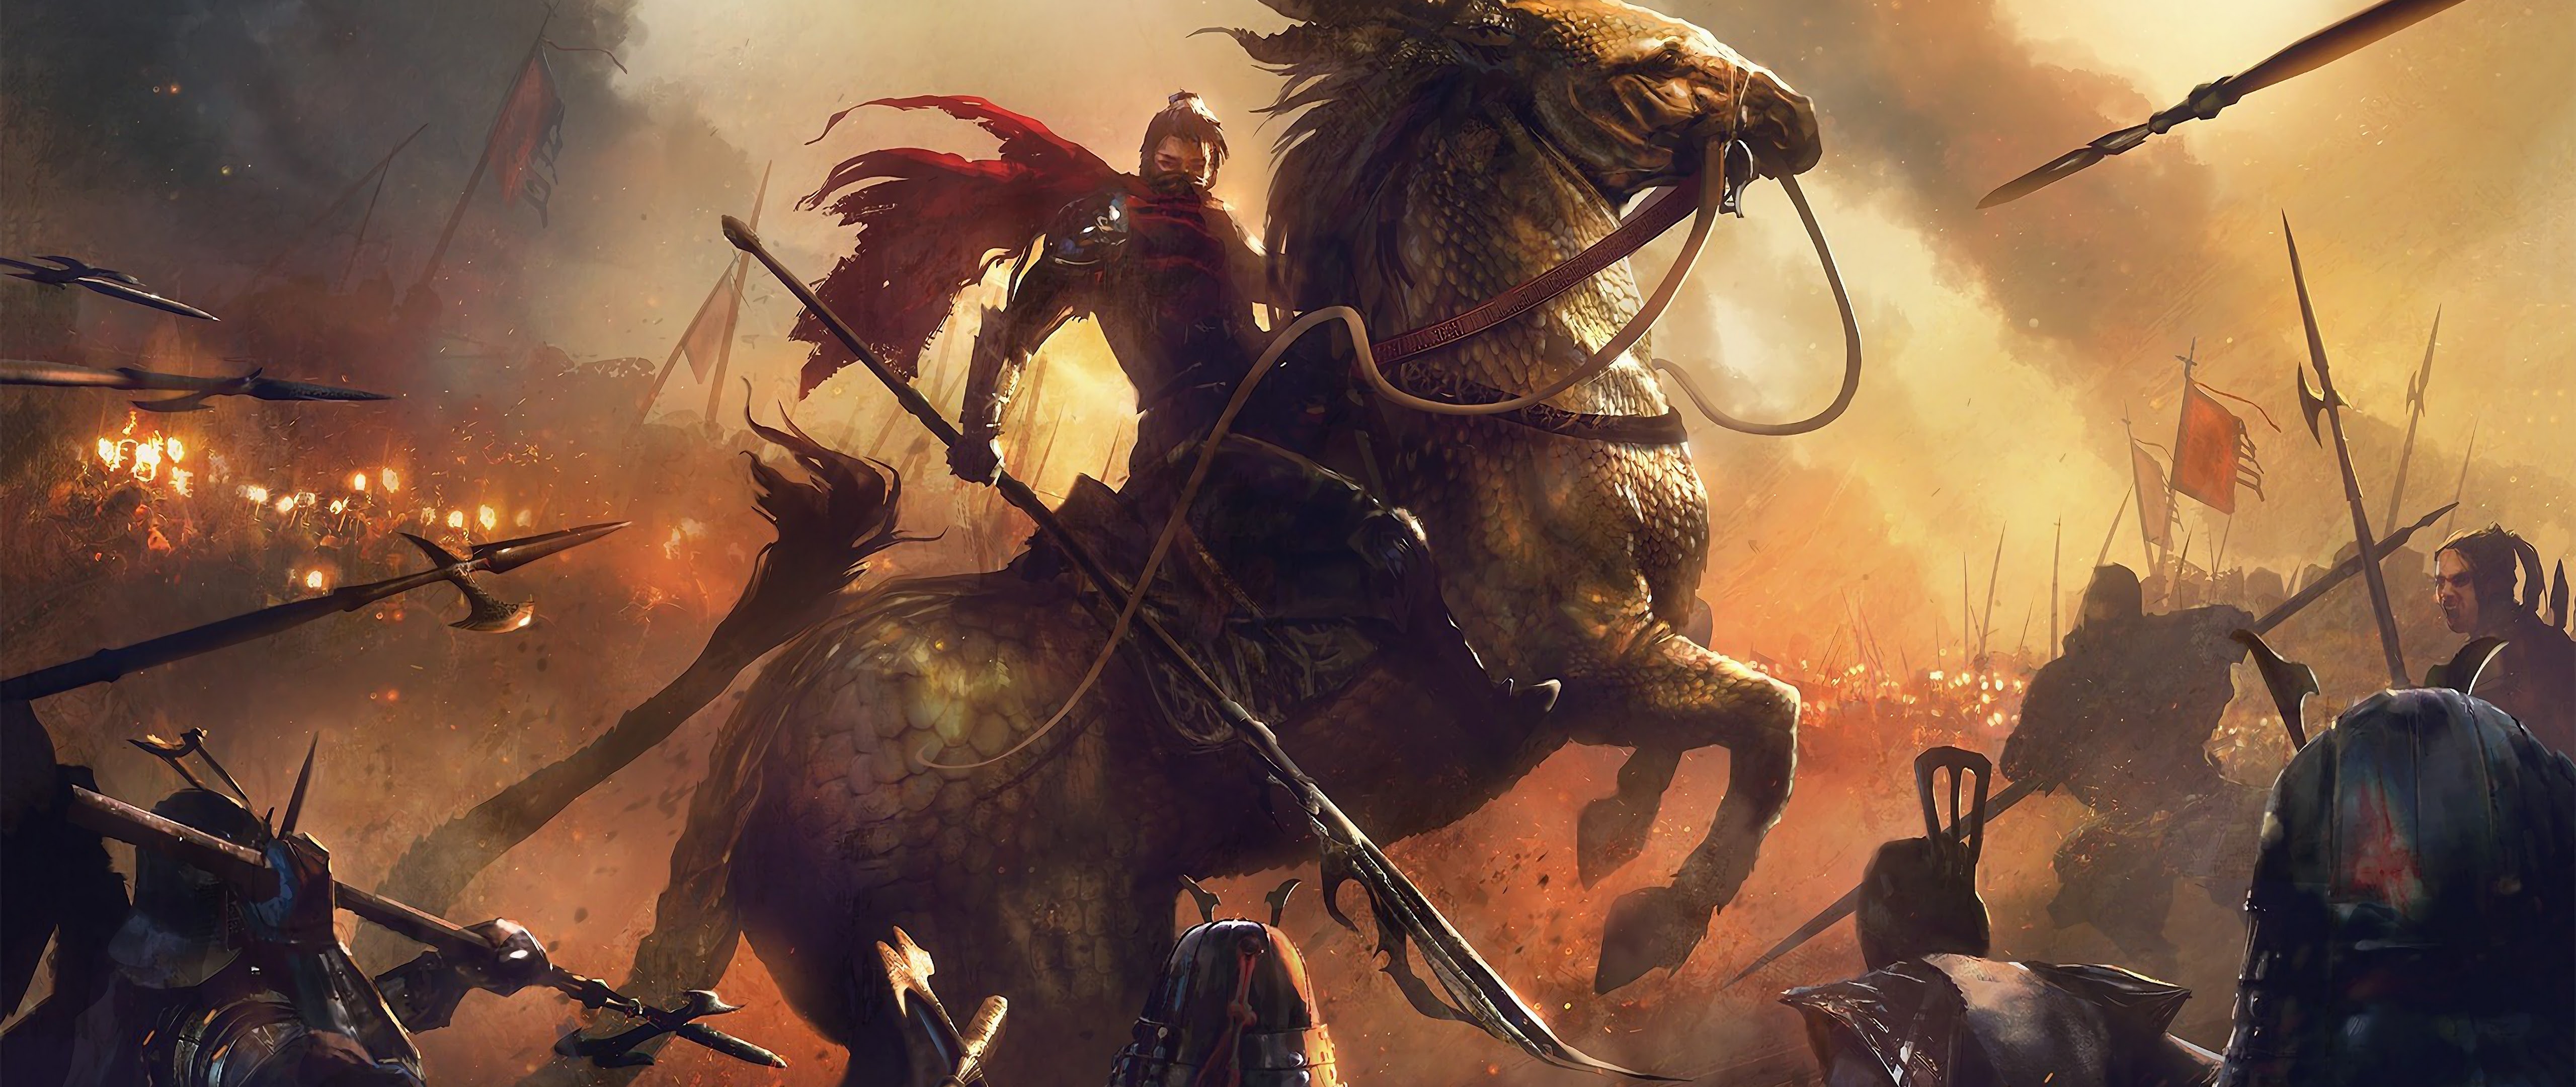 Epic Fantasy Knight Army Battle 4K Wallpaper